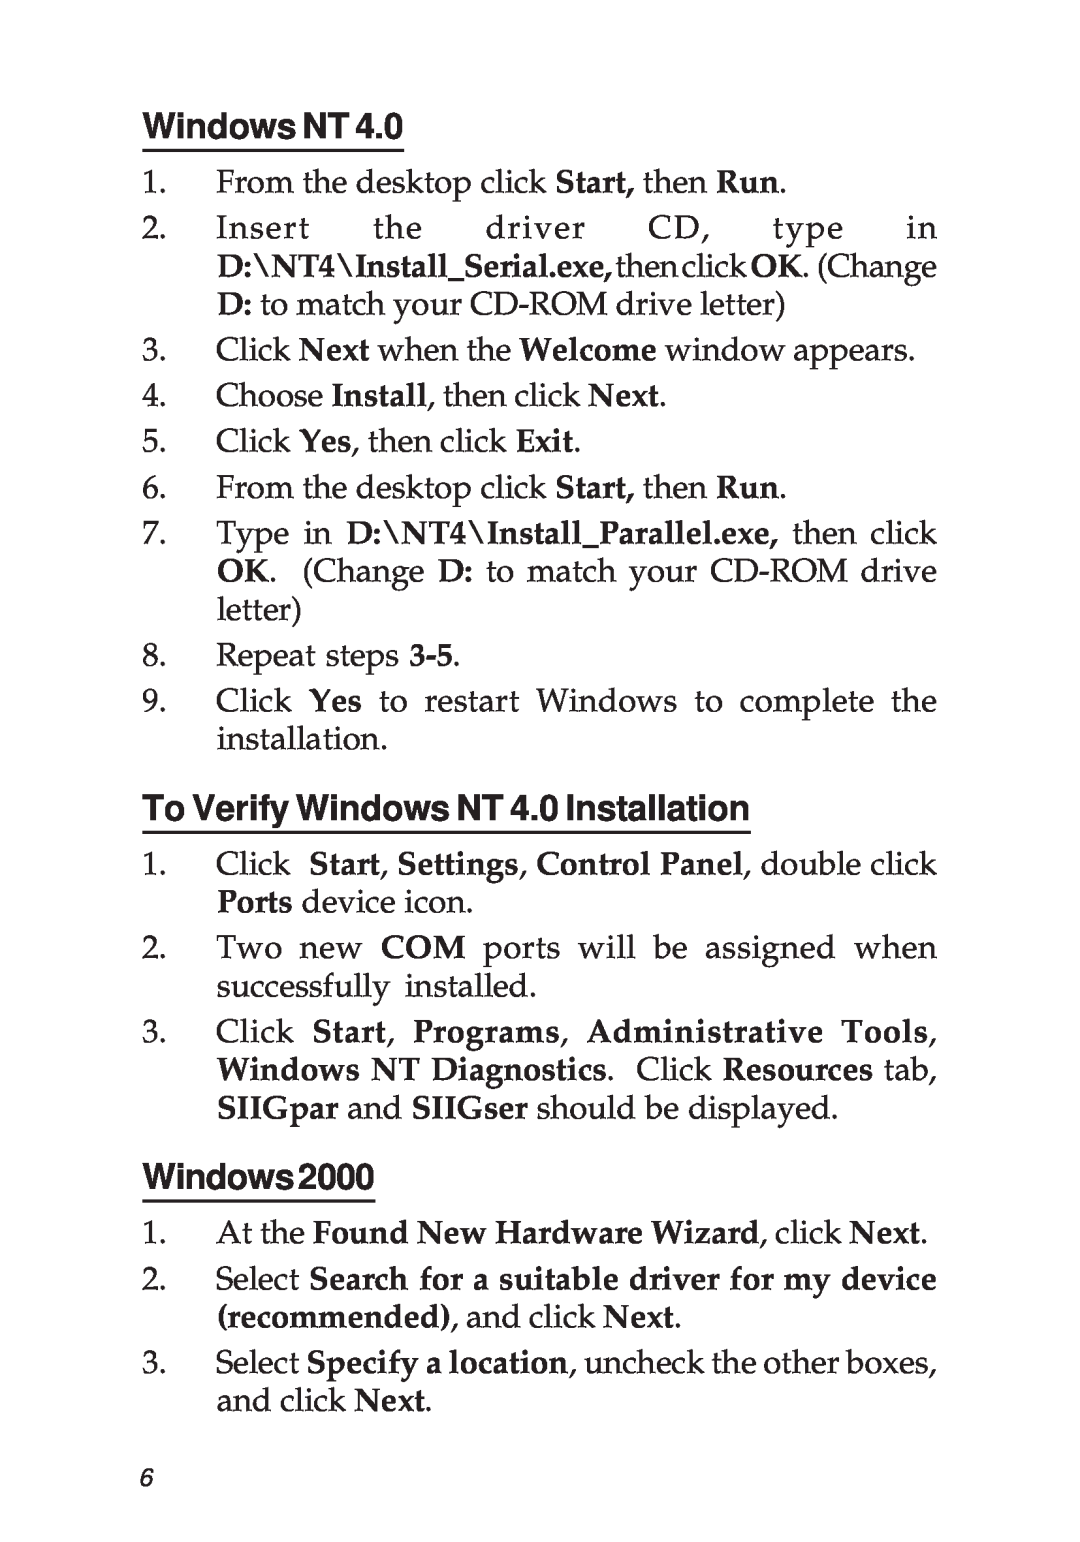 SIIG 2S1P manual To Verify Windows NT 4.0 Installation, Windows2000 